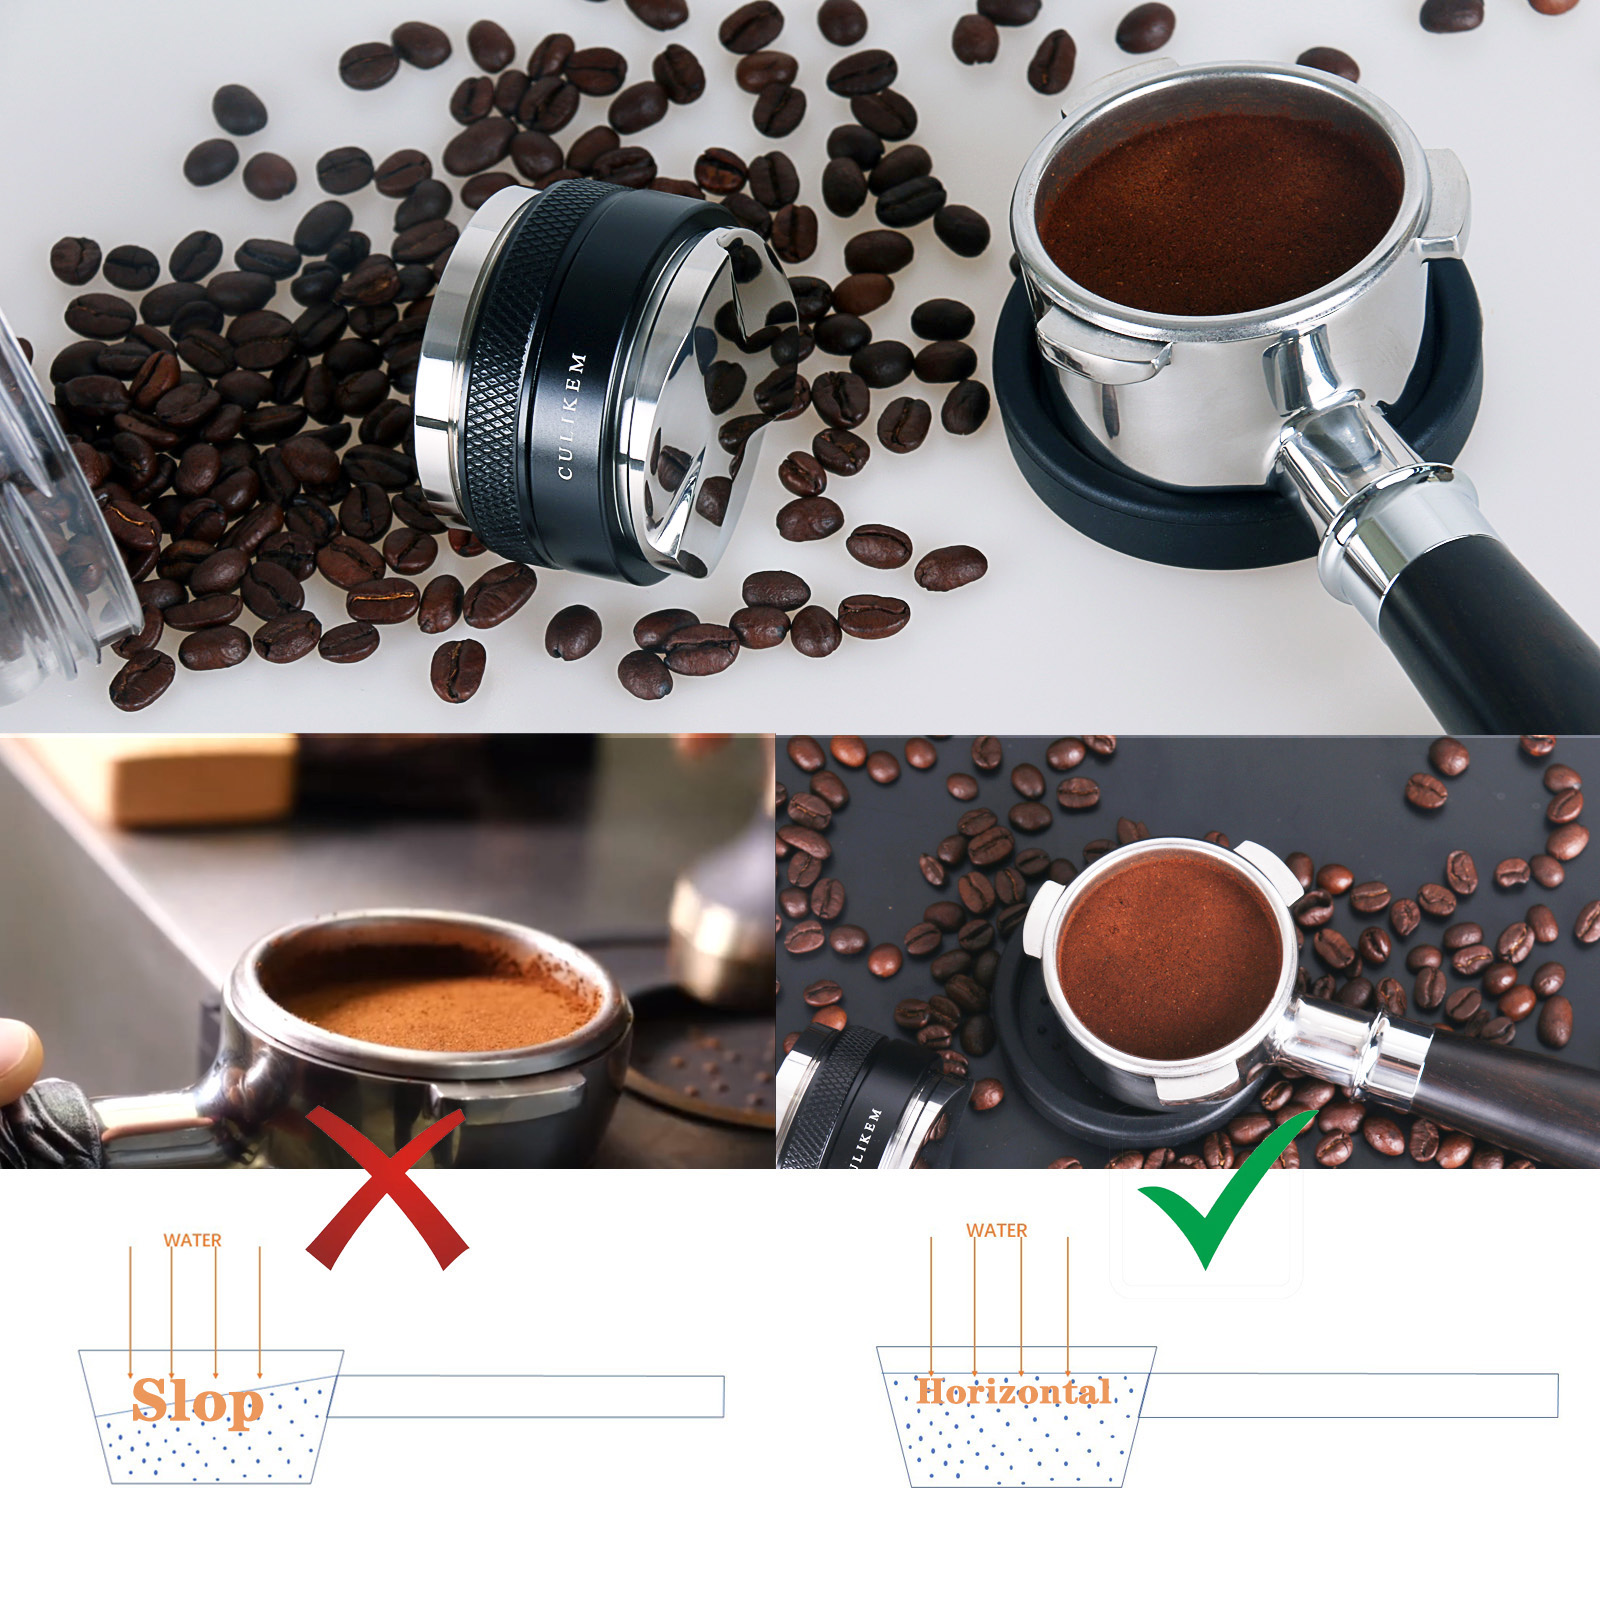 Espresso Tamper Coffee Distributor Tool – 53mm Coffee Distributor and  Tamper, CULIKEM Dual Head Espresso Distribution Tool Fits for 54mm  Portafilter, Wdt Tool, Espresso Accessories – CULIKEM®